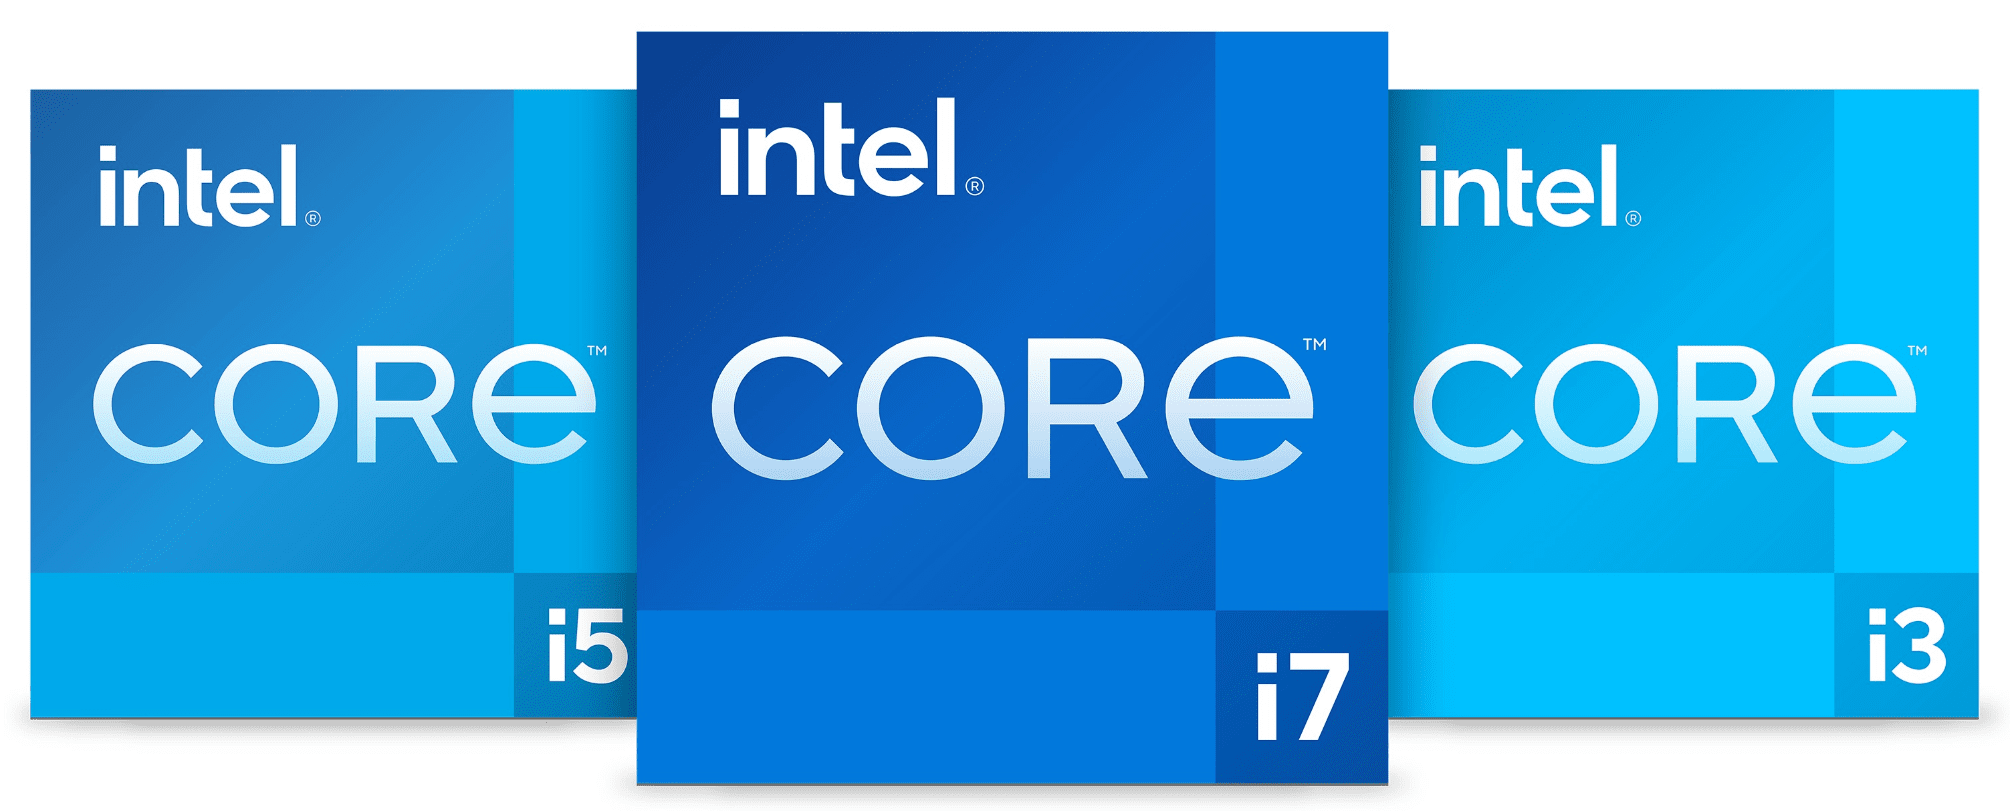 Intel Core 11th generation processors